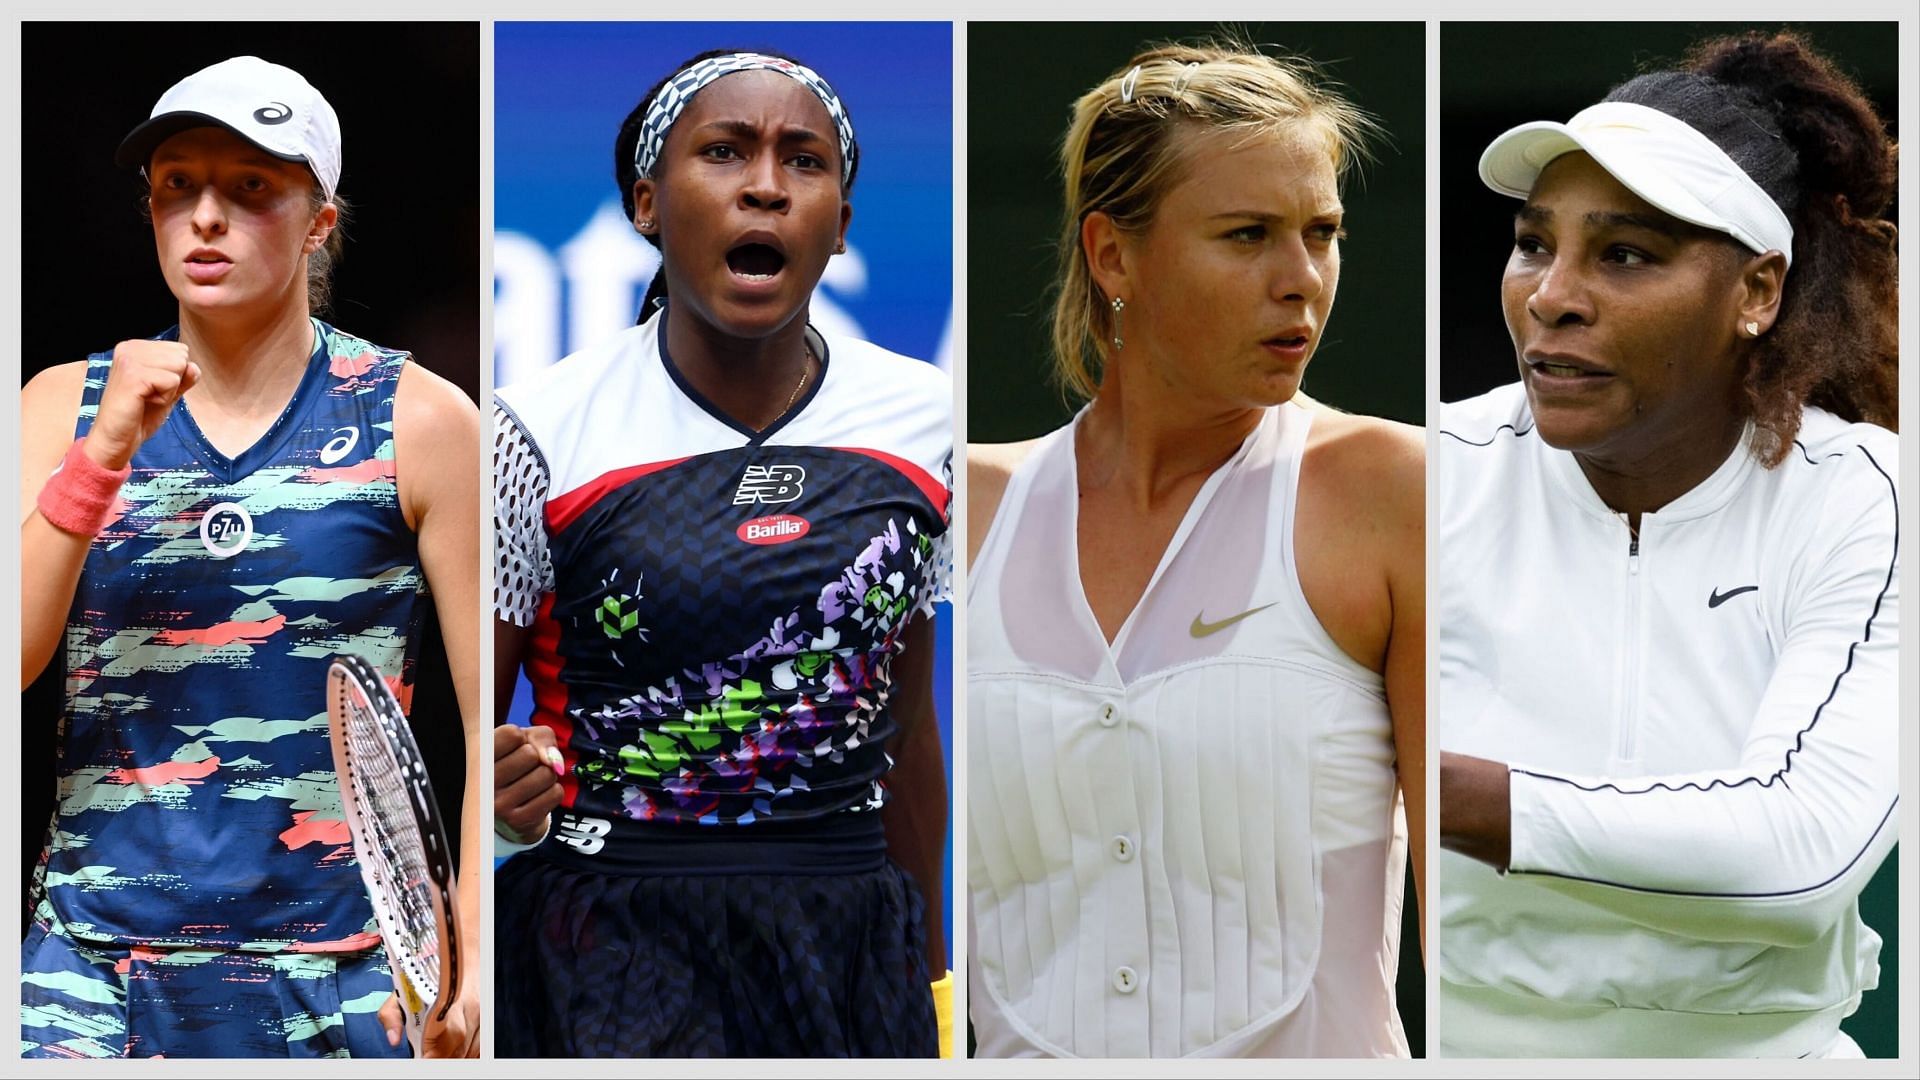 The Swiatek - Gauff rivalry is going the Serena - Sharapova one did